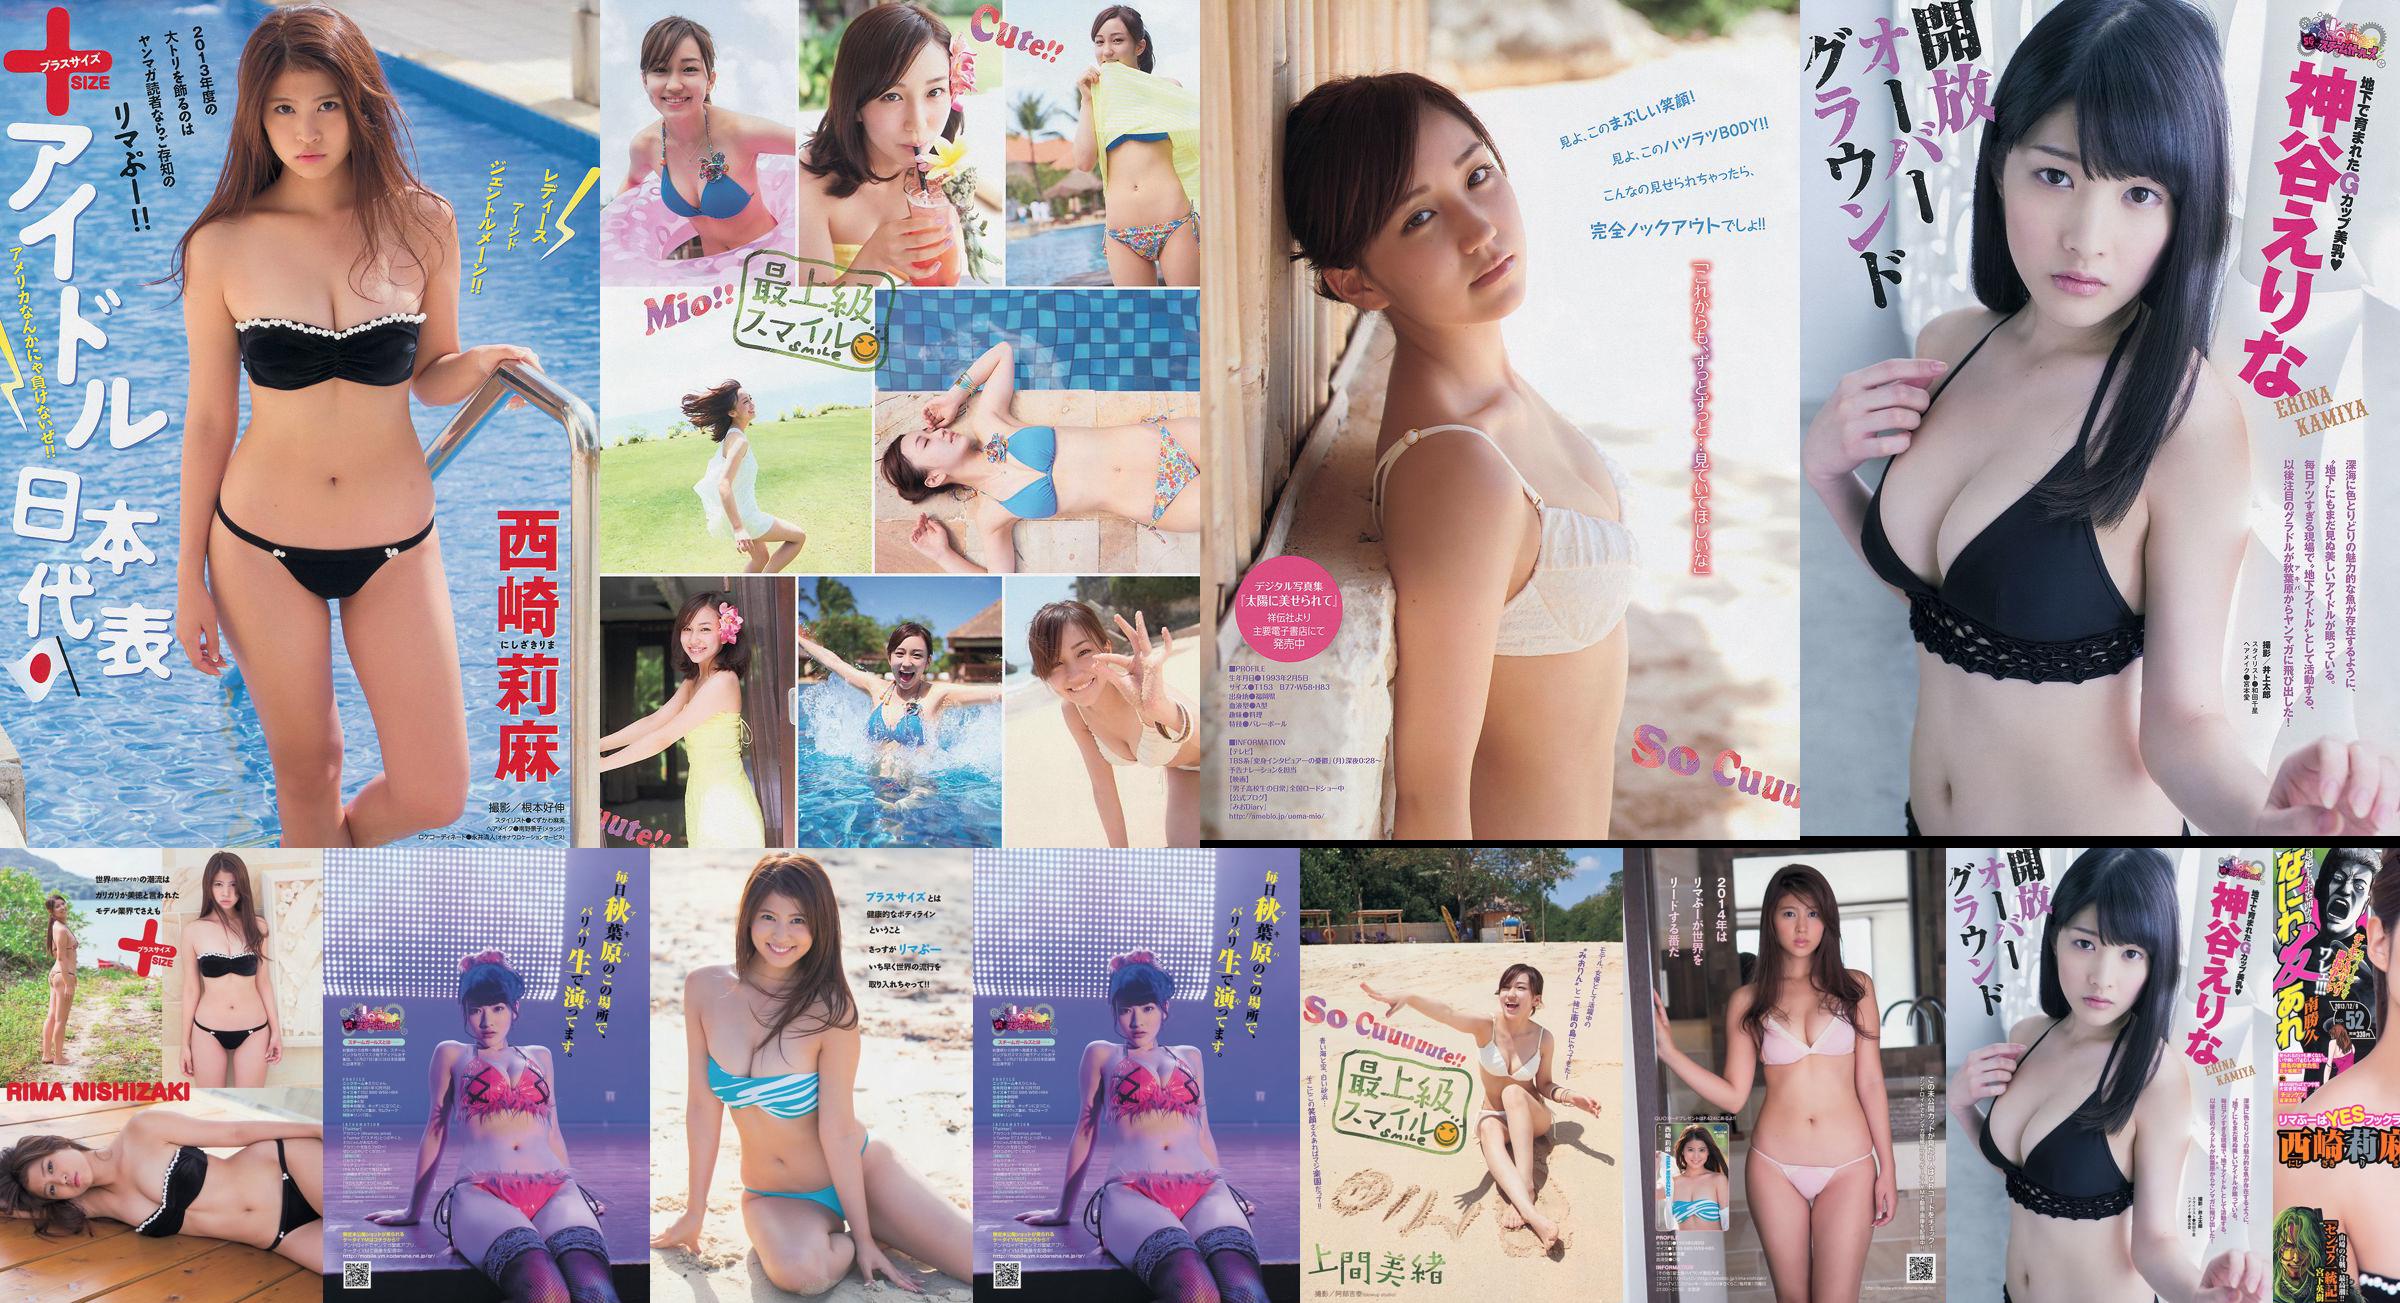 [Young Magazine] Rima Nishizaki Mio Uema Erina Kamiya 2013 No.52 Foto Moshi No.f124f2 Pagina 1